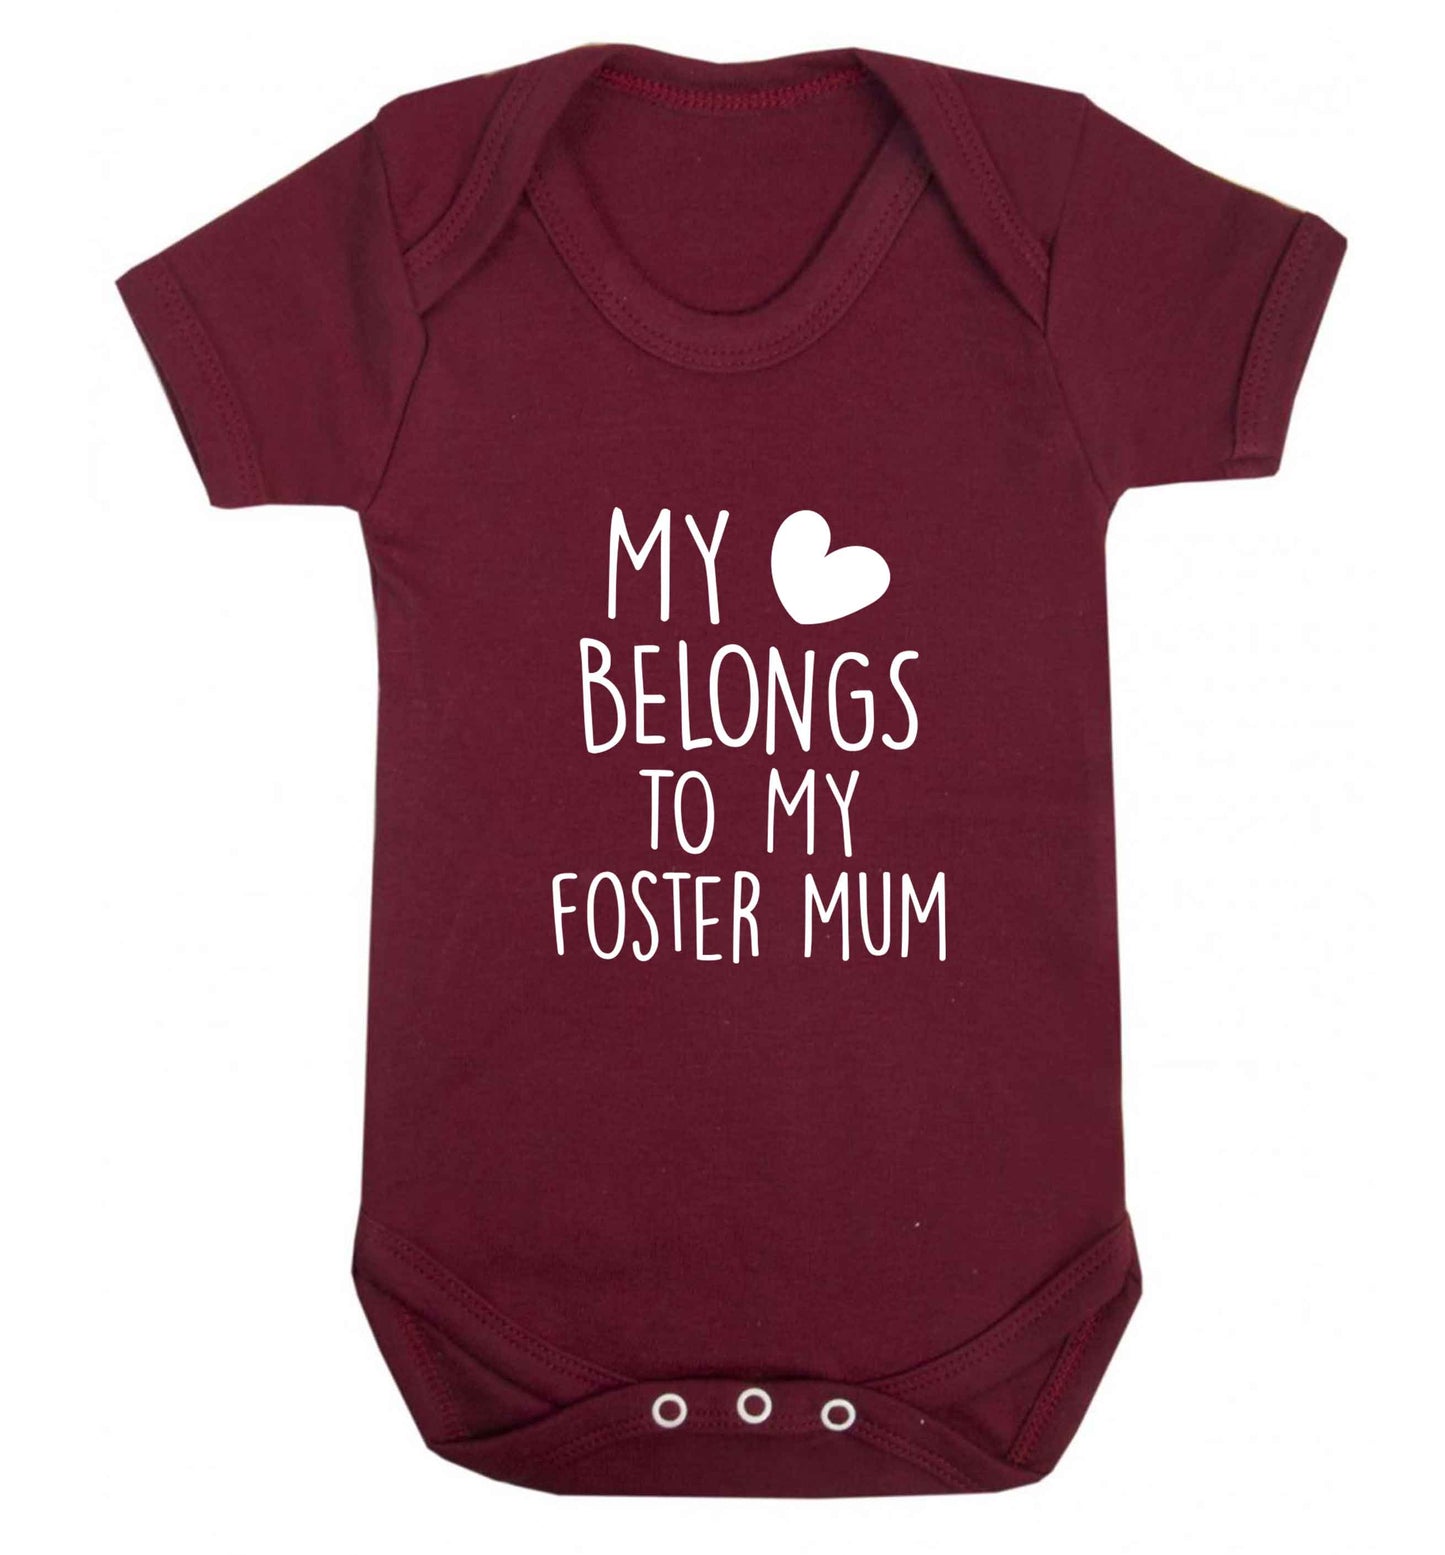 My heart belongs to my foster mum baby vest maroon 18-24 months